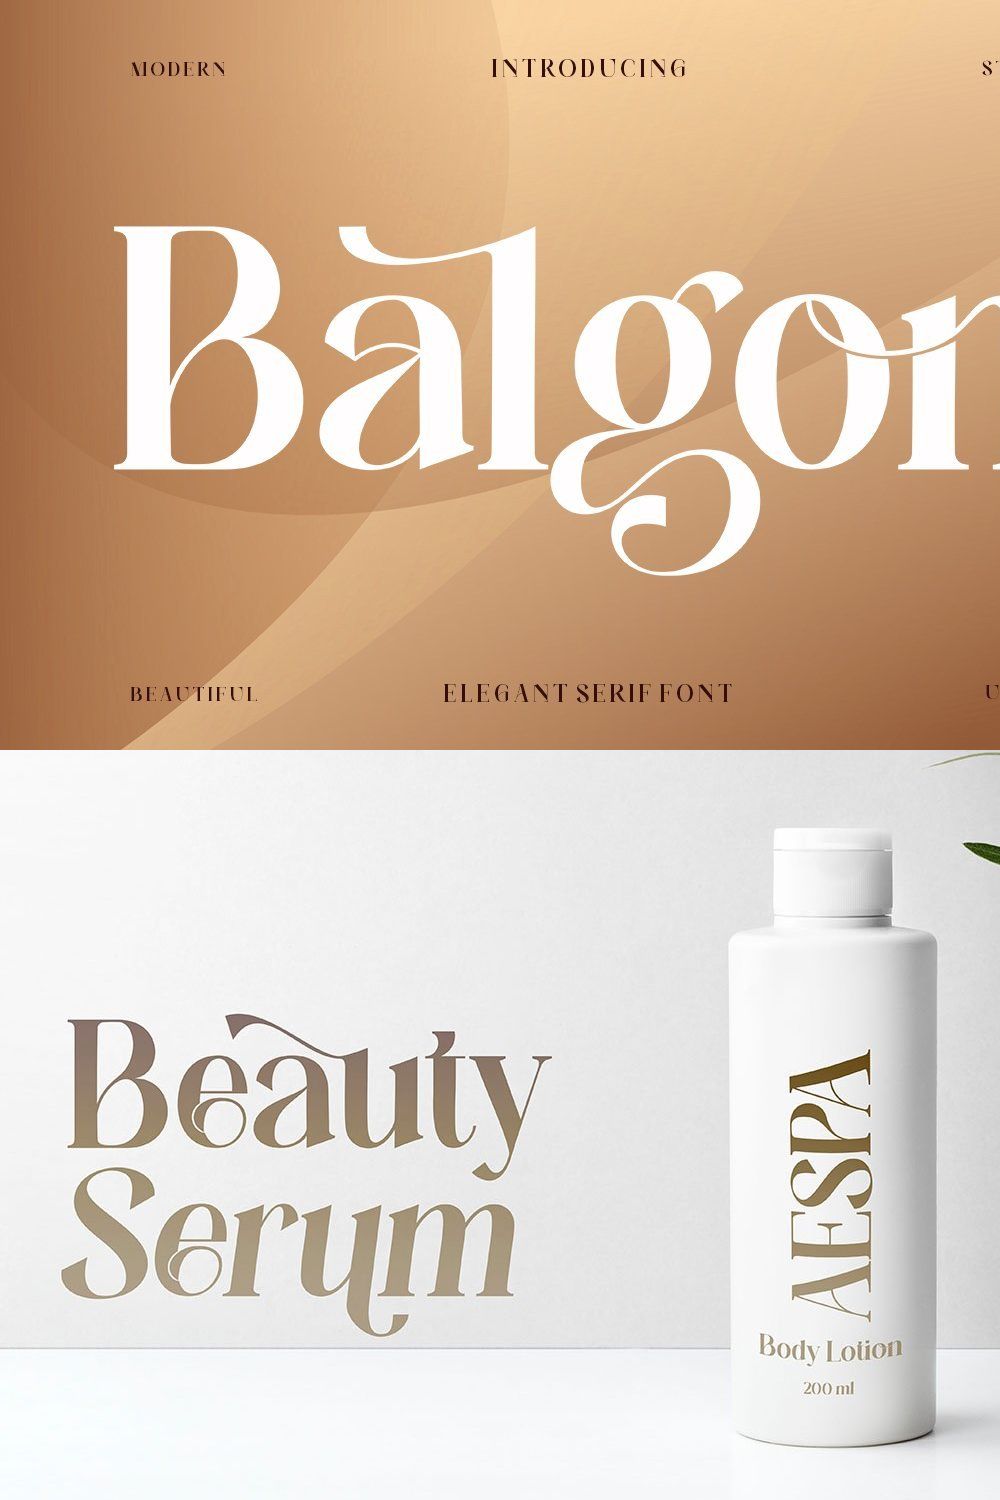 Balgon Serif 3 Fonts pinterest preview image.